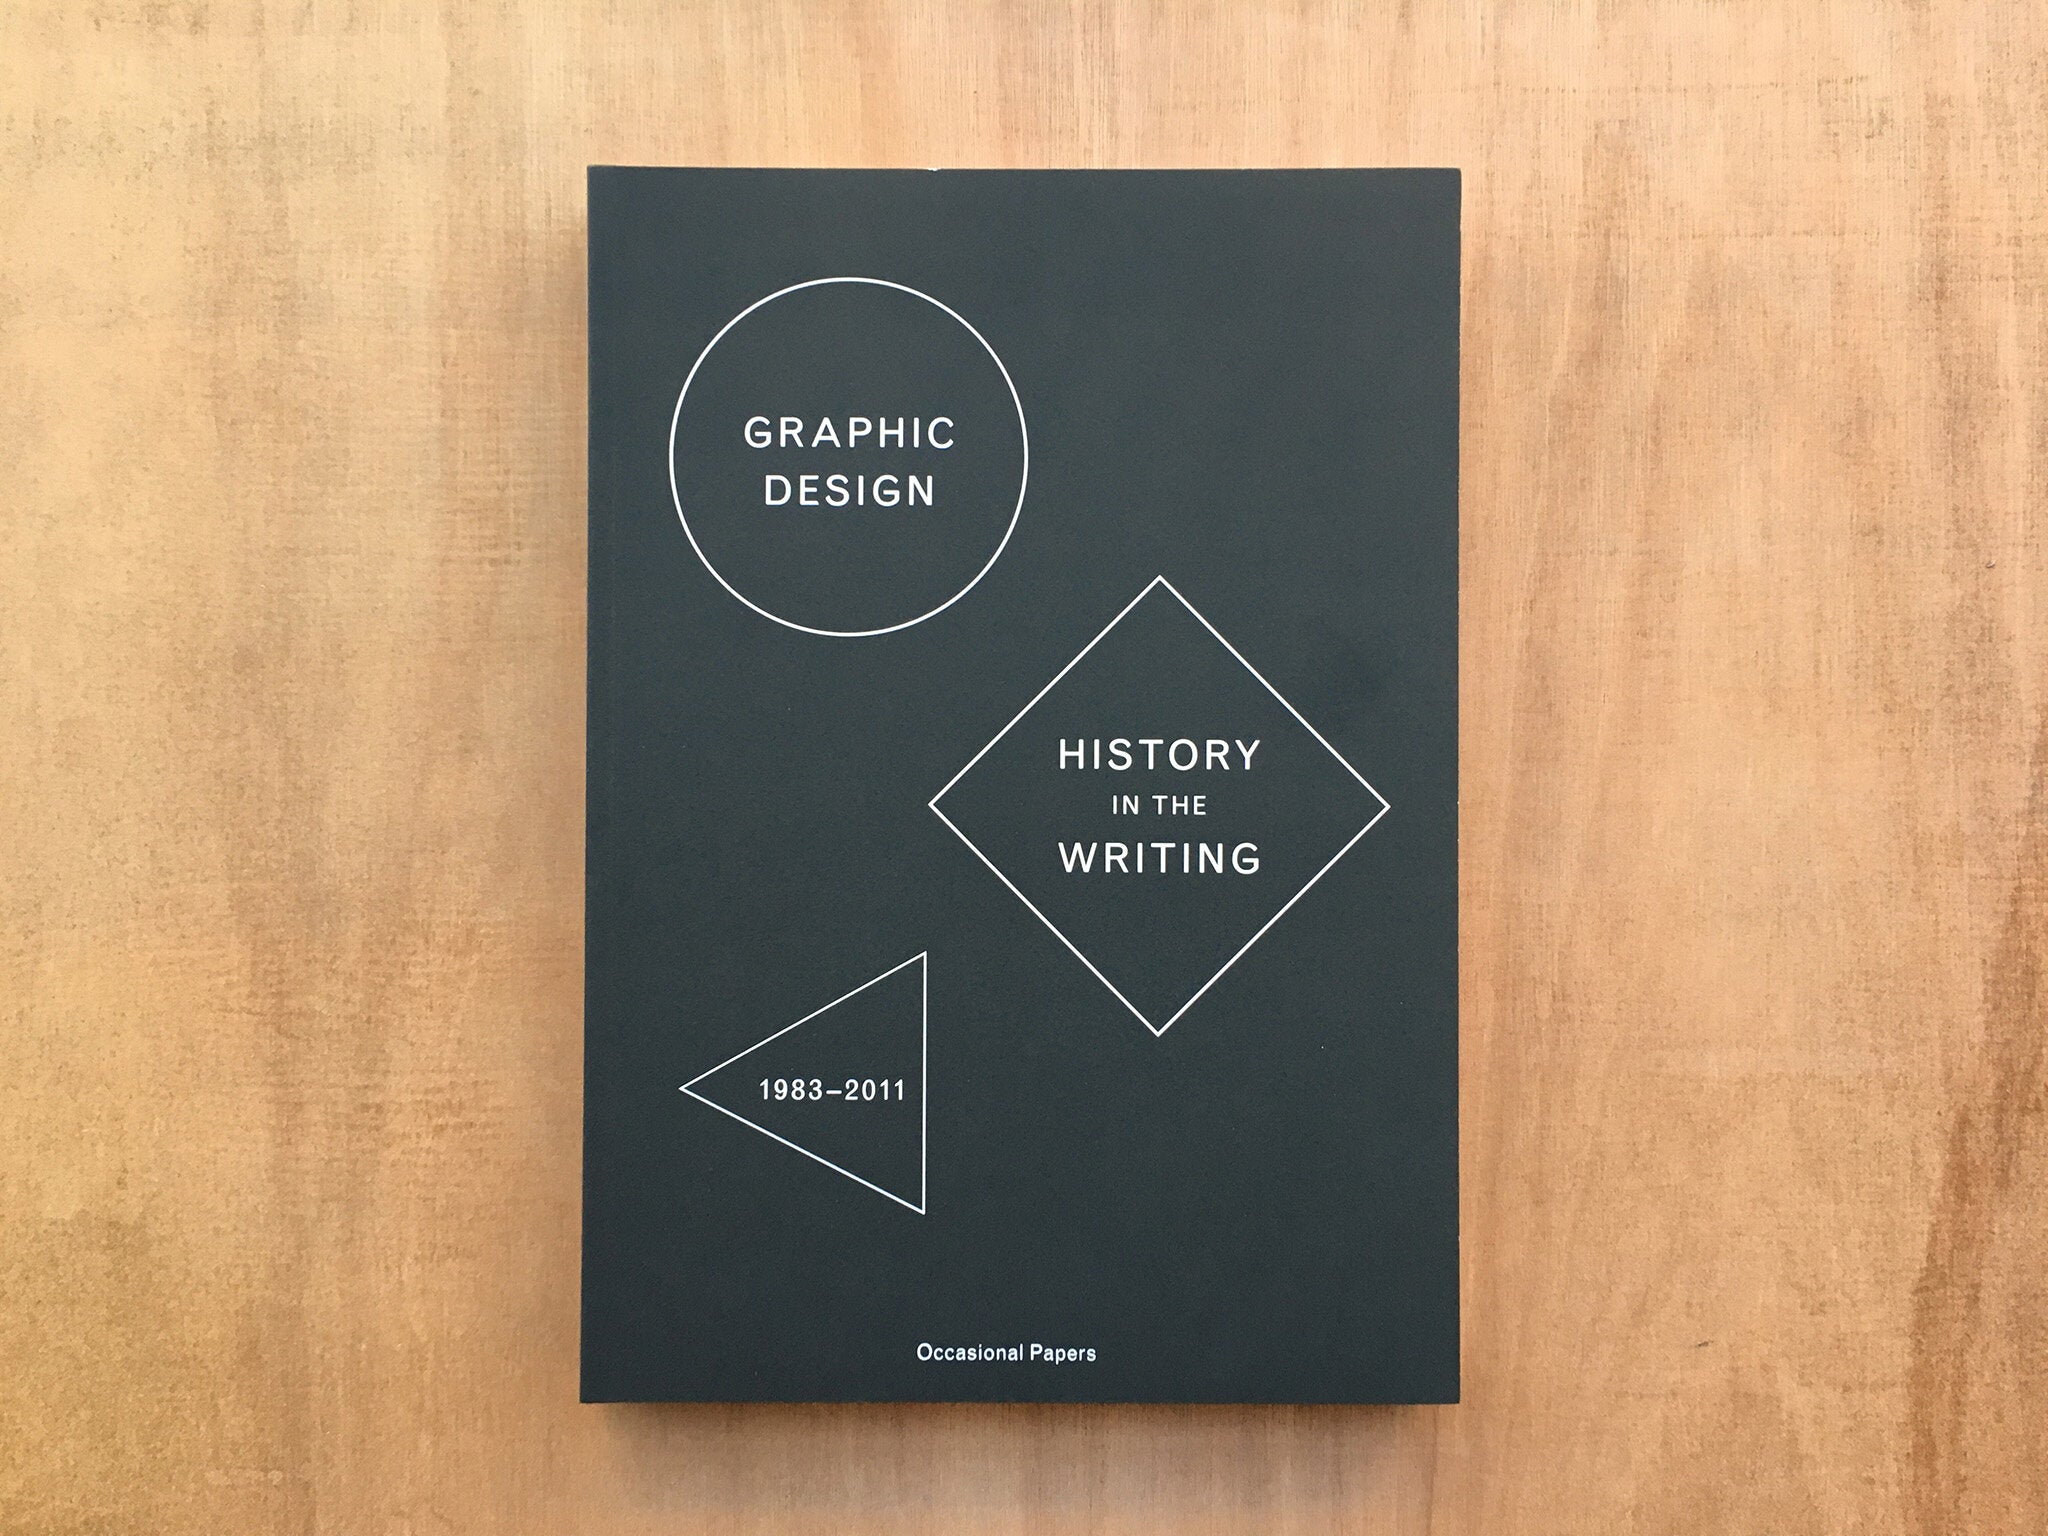 GRAPHIC DESIGN: HISTORY IN THE WRITING (1983–2011) ed. Catherine de Smet and Sara De Bondt